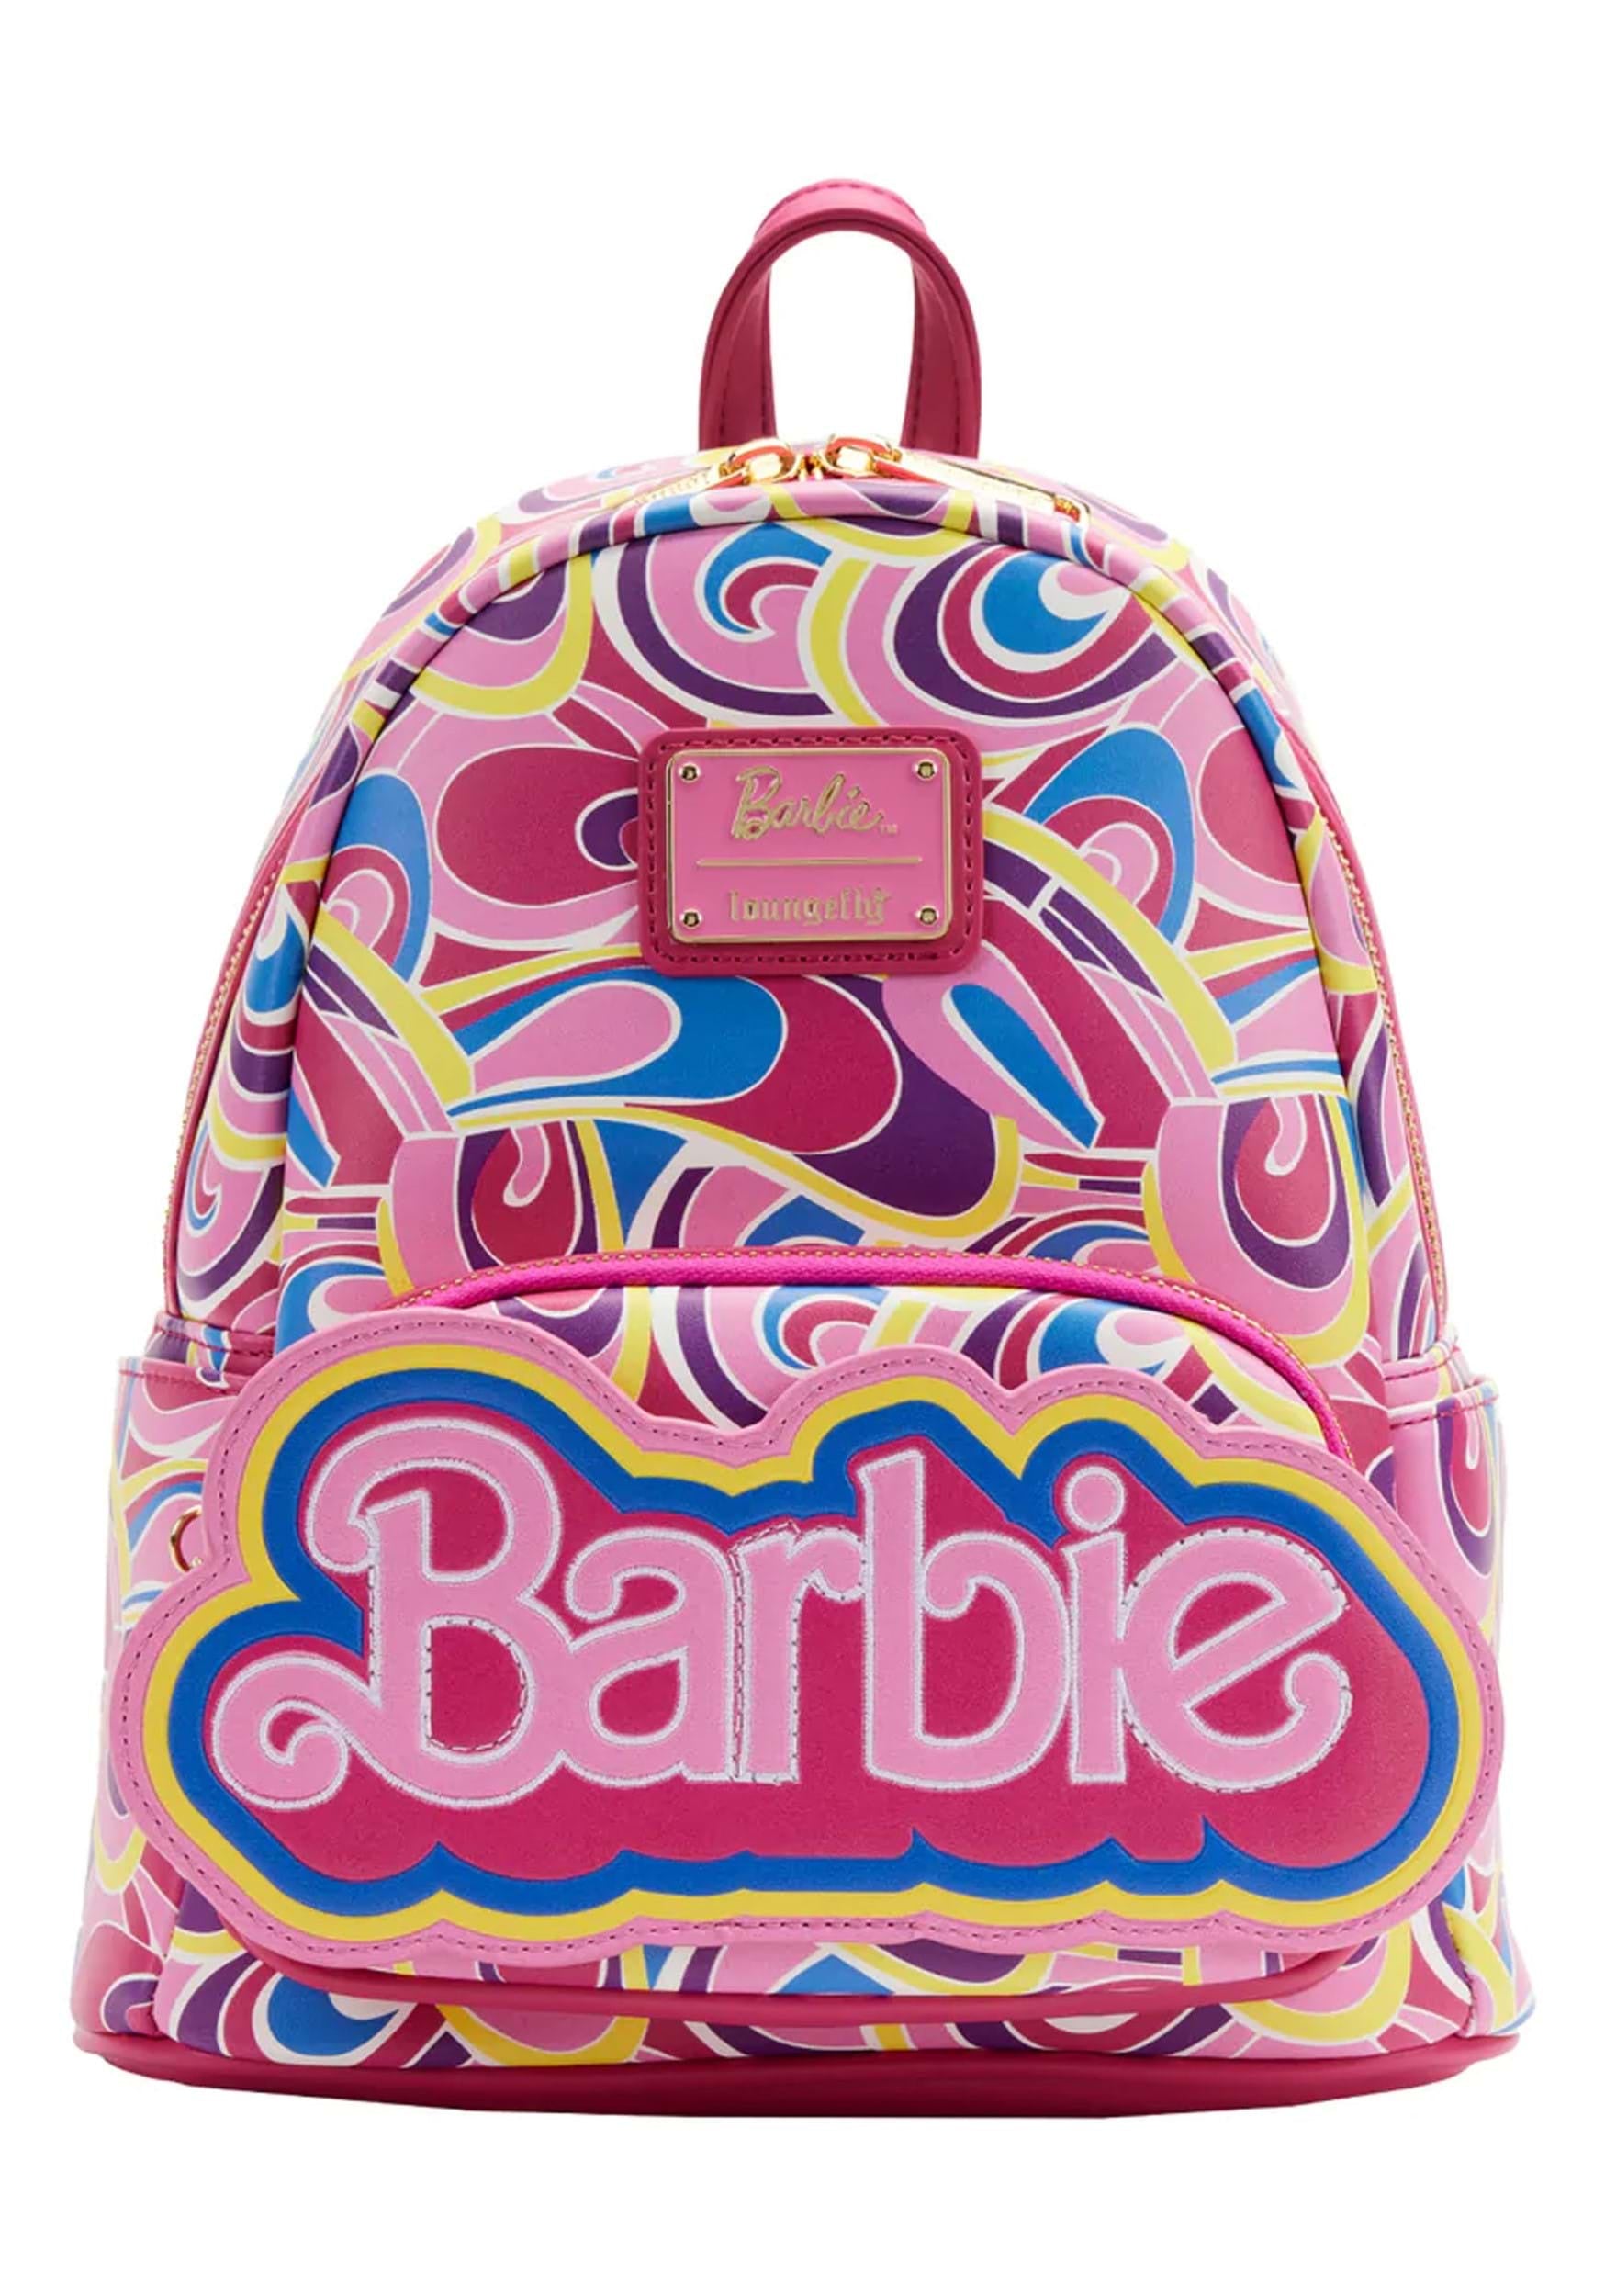 Mattel Barbie Totally Hair 30th Anniversary Mini Backpack